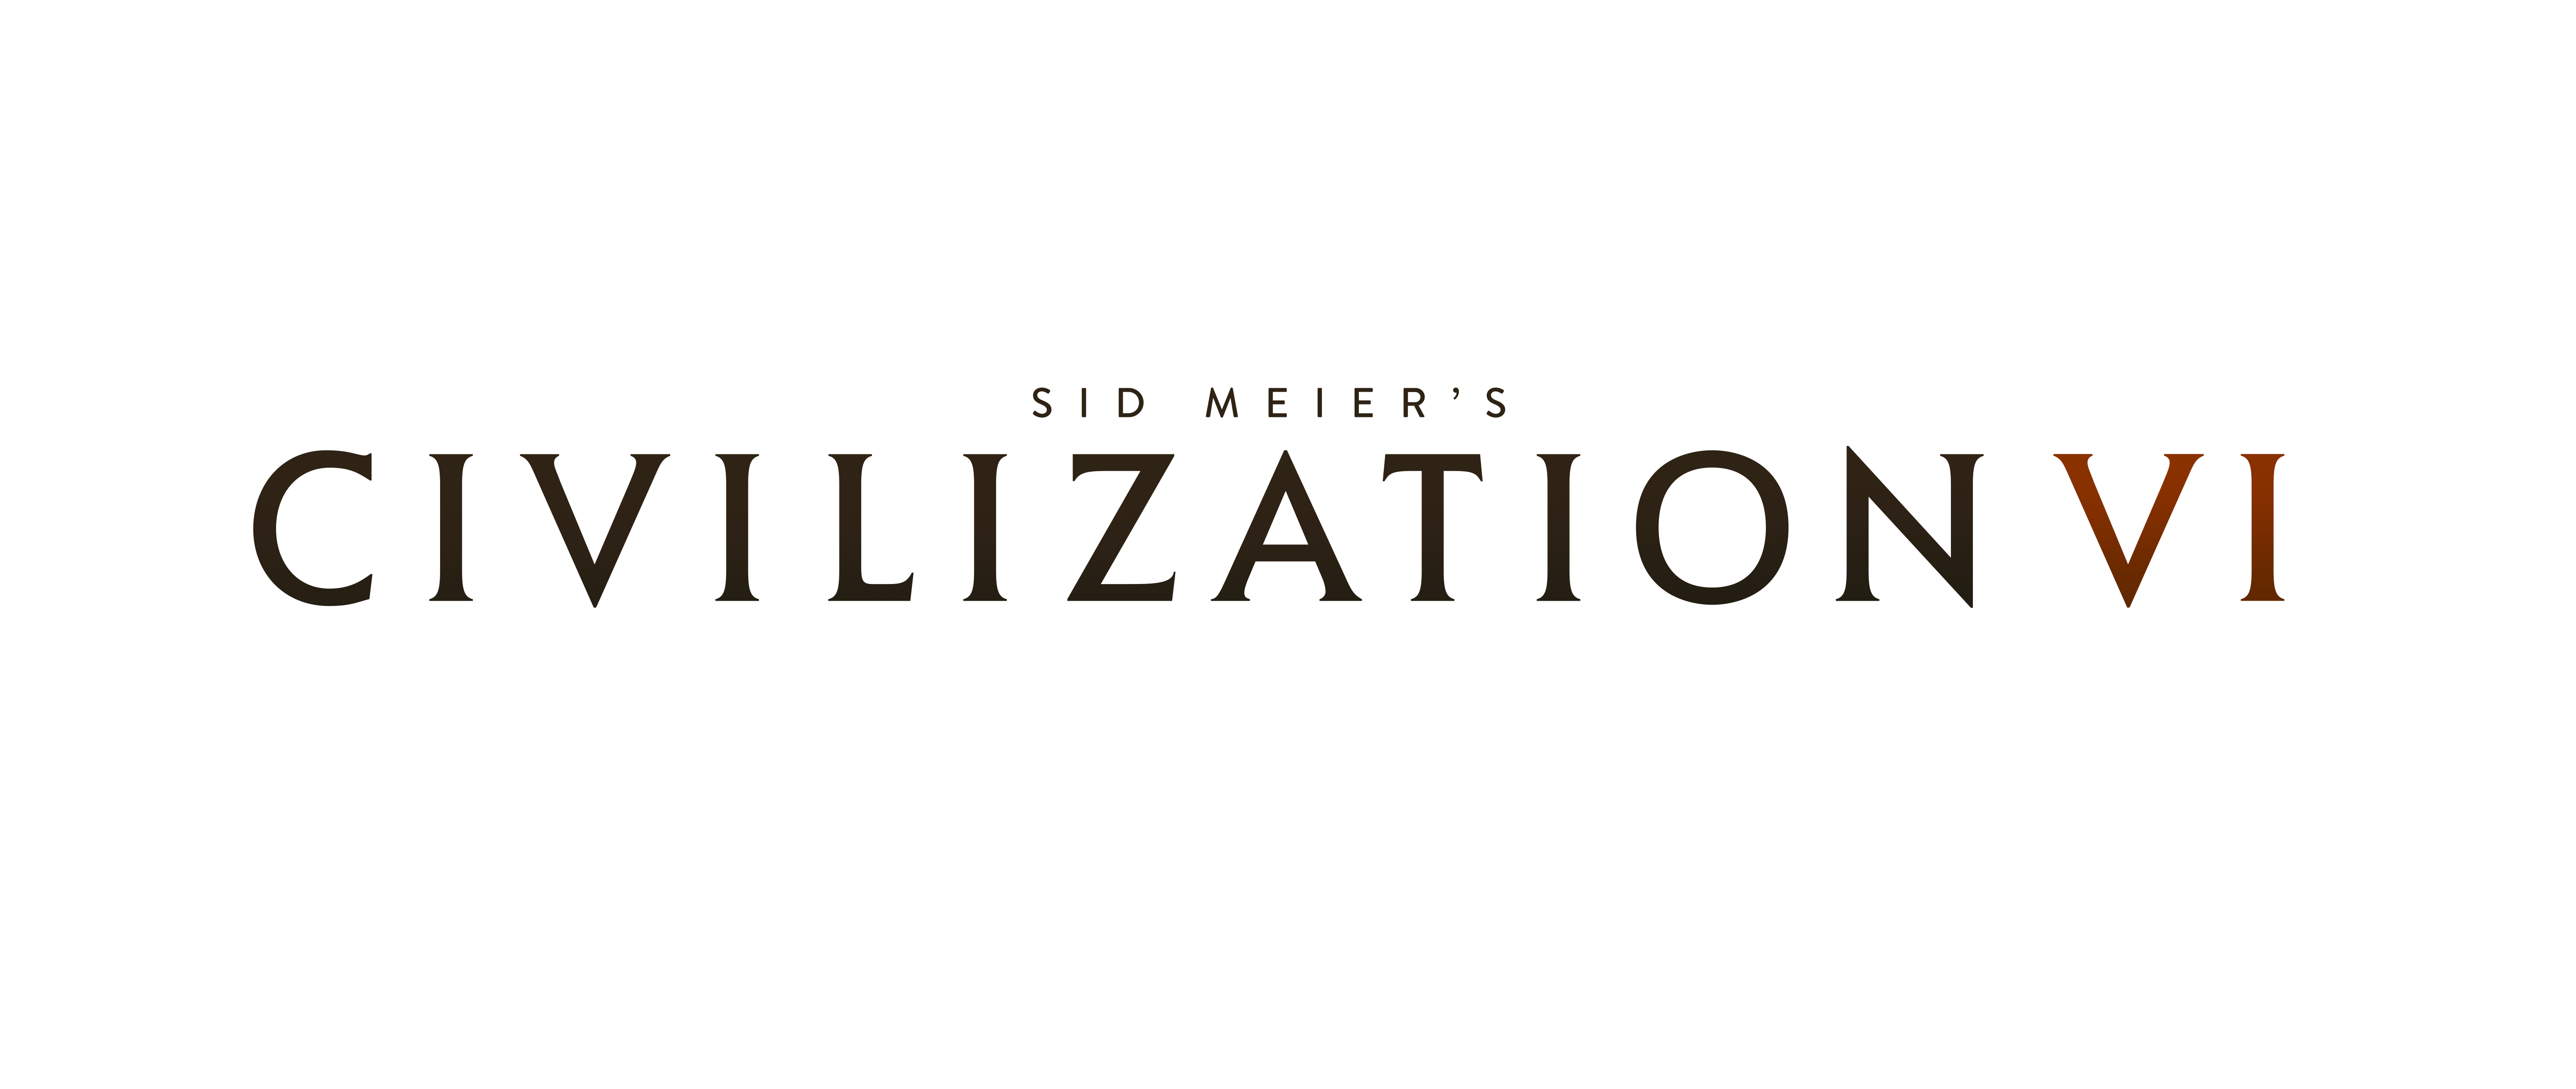 Civilization 6 mac download free. full game